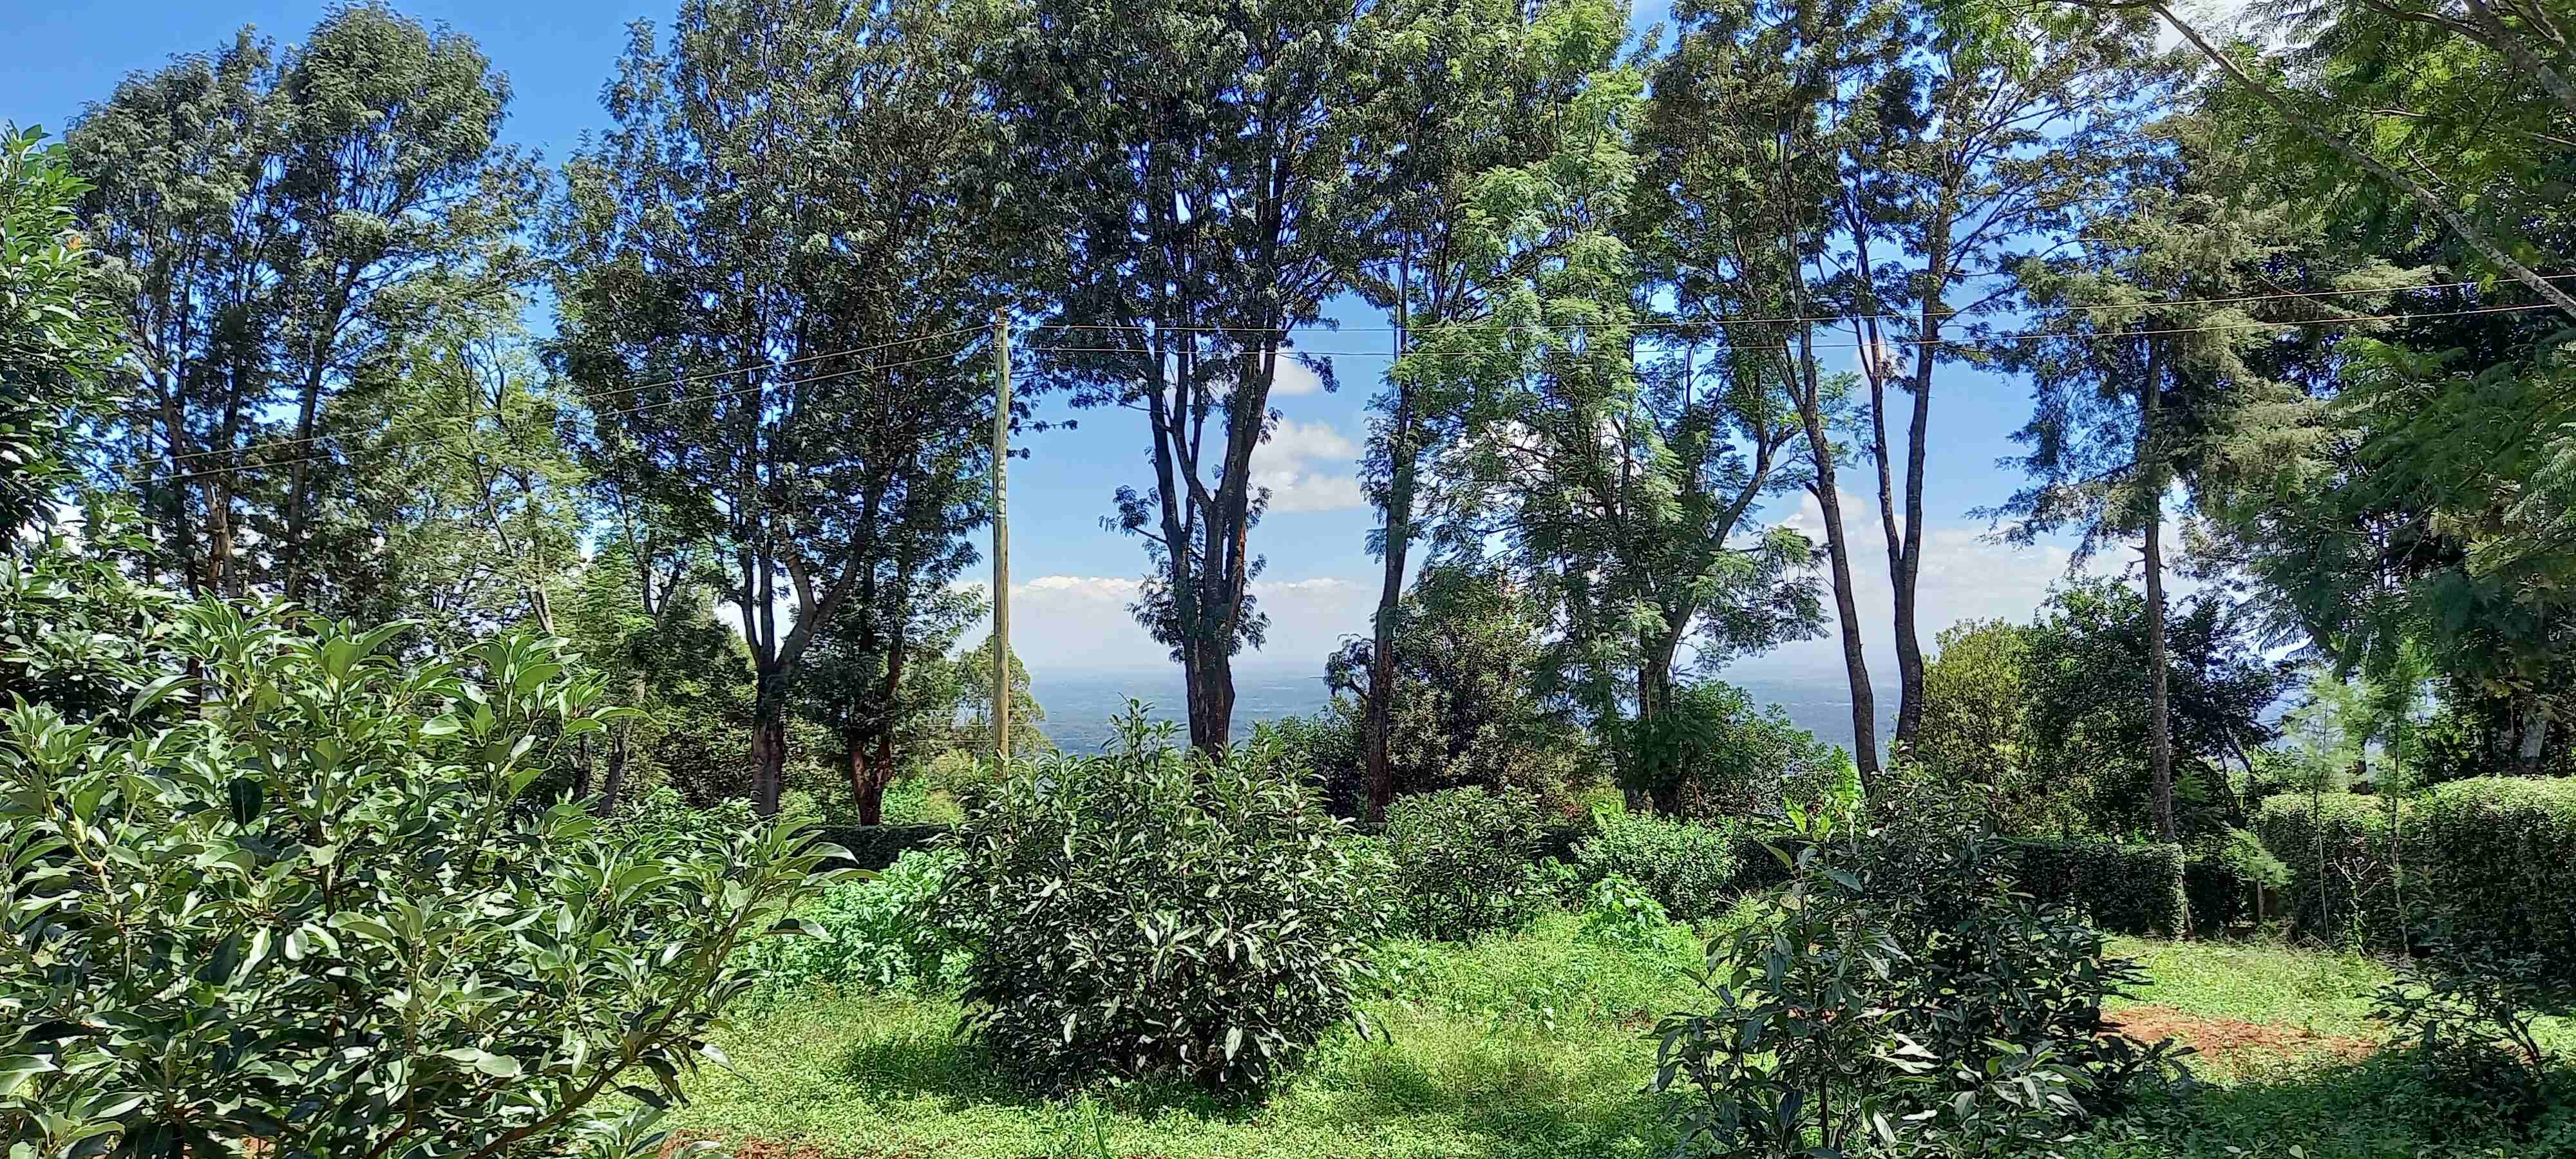 A farm in Kangundo with a growing avocado orchard